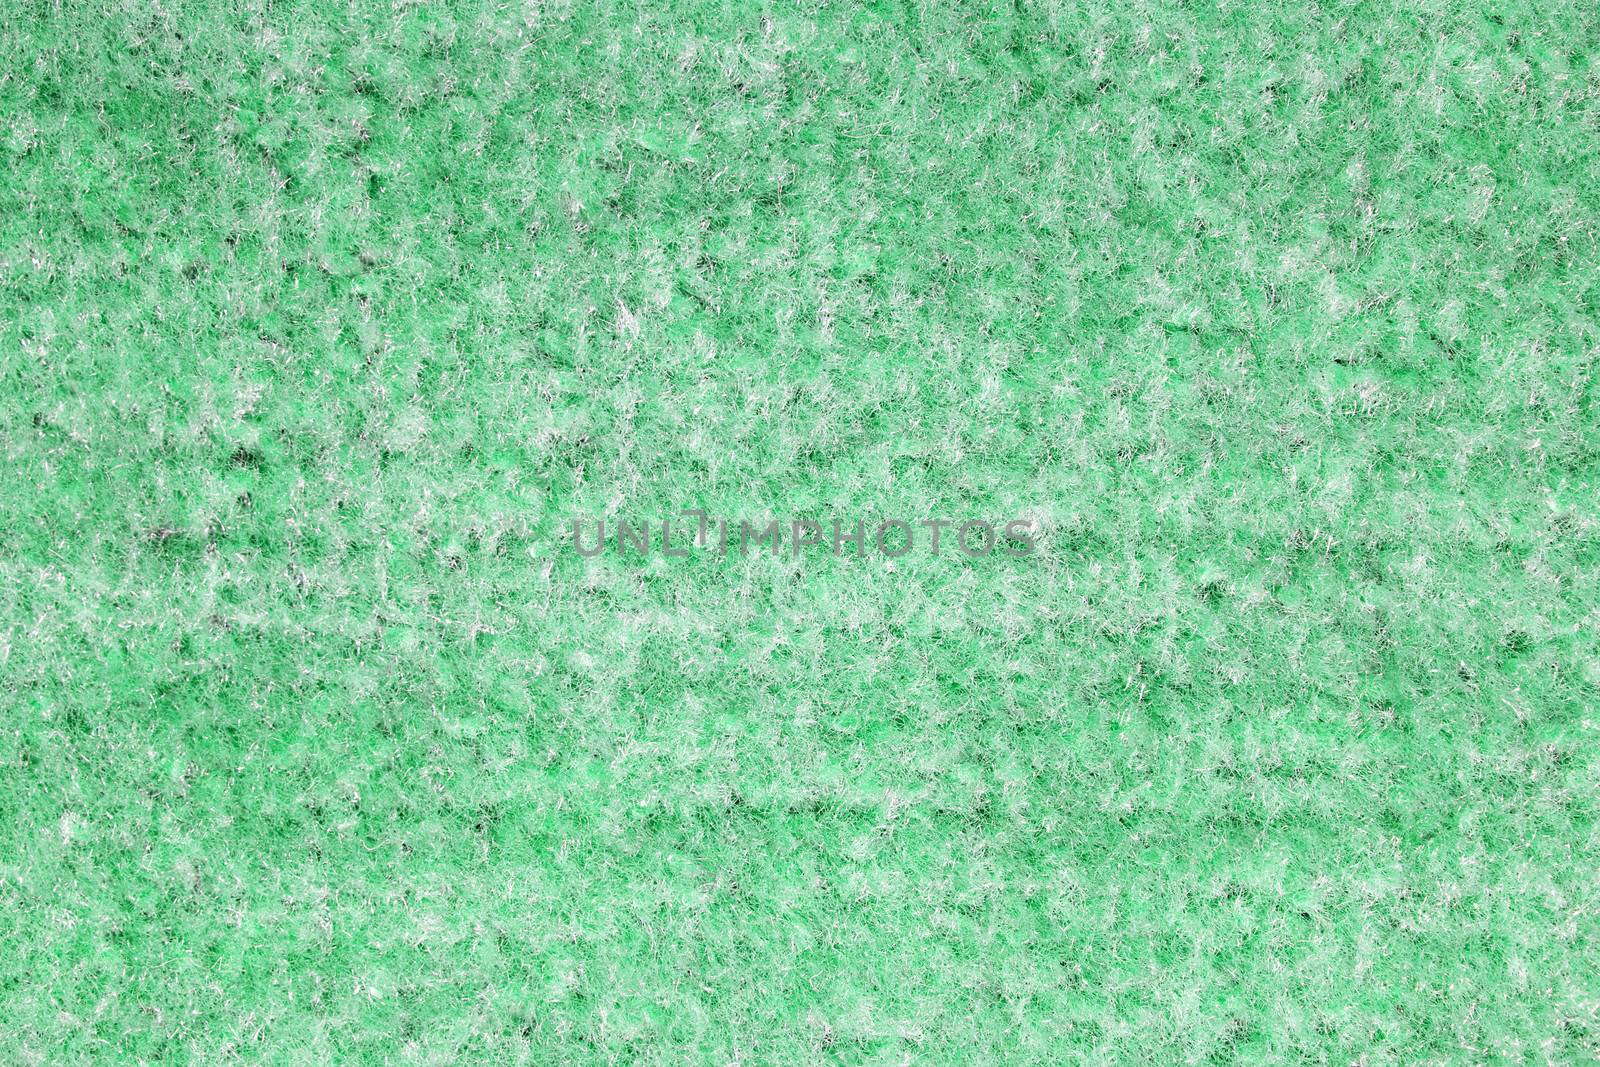 Background of green carpet or foot scraper